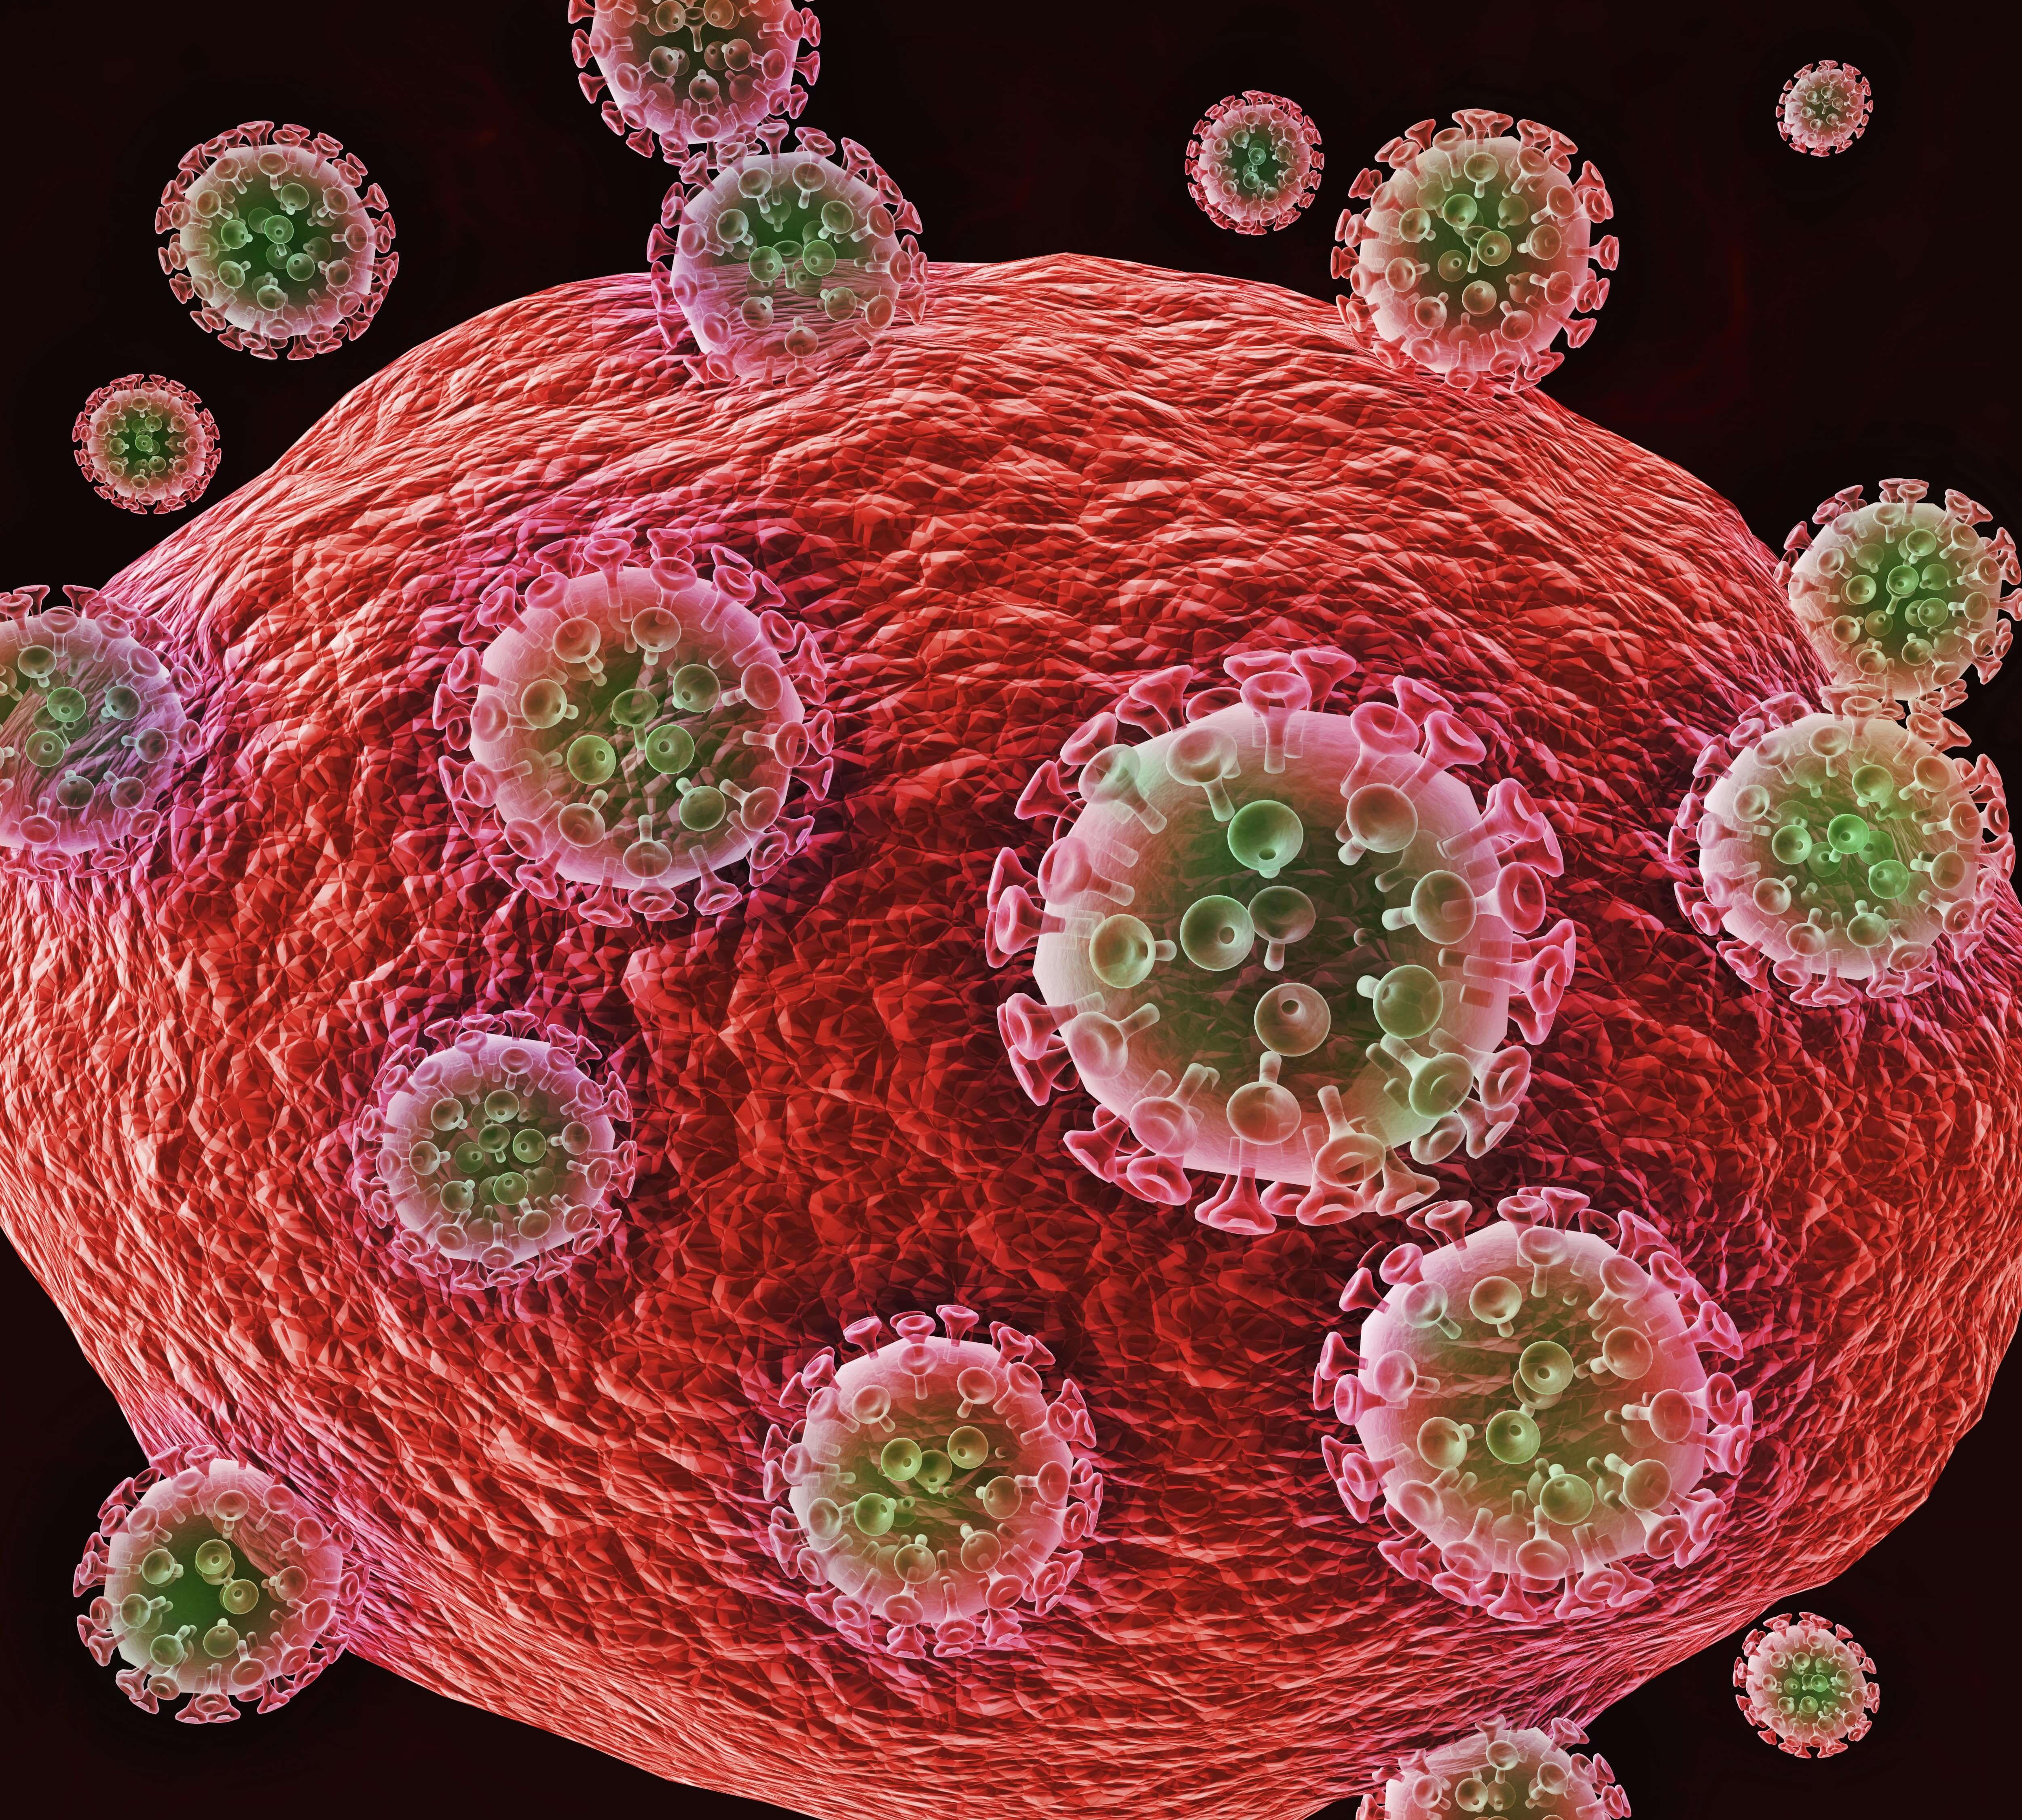 Researchers Unlock Secrets of Enzyme Blocking HIV Using Twist Bioscience’s Oligo Pools